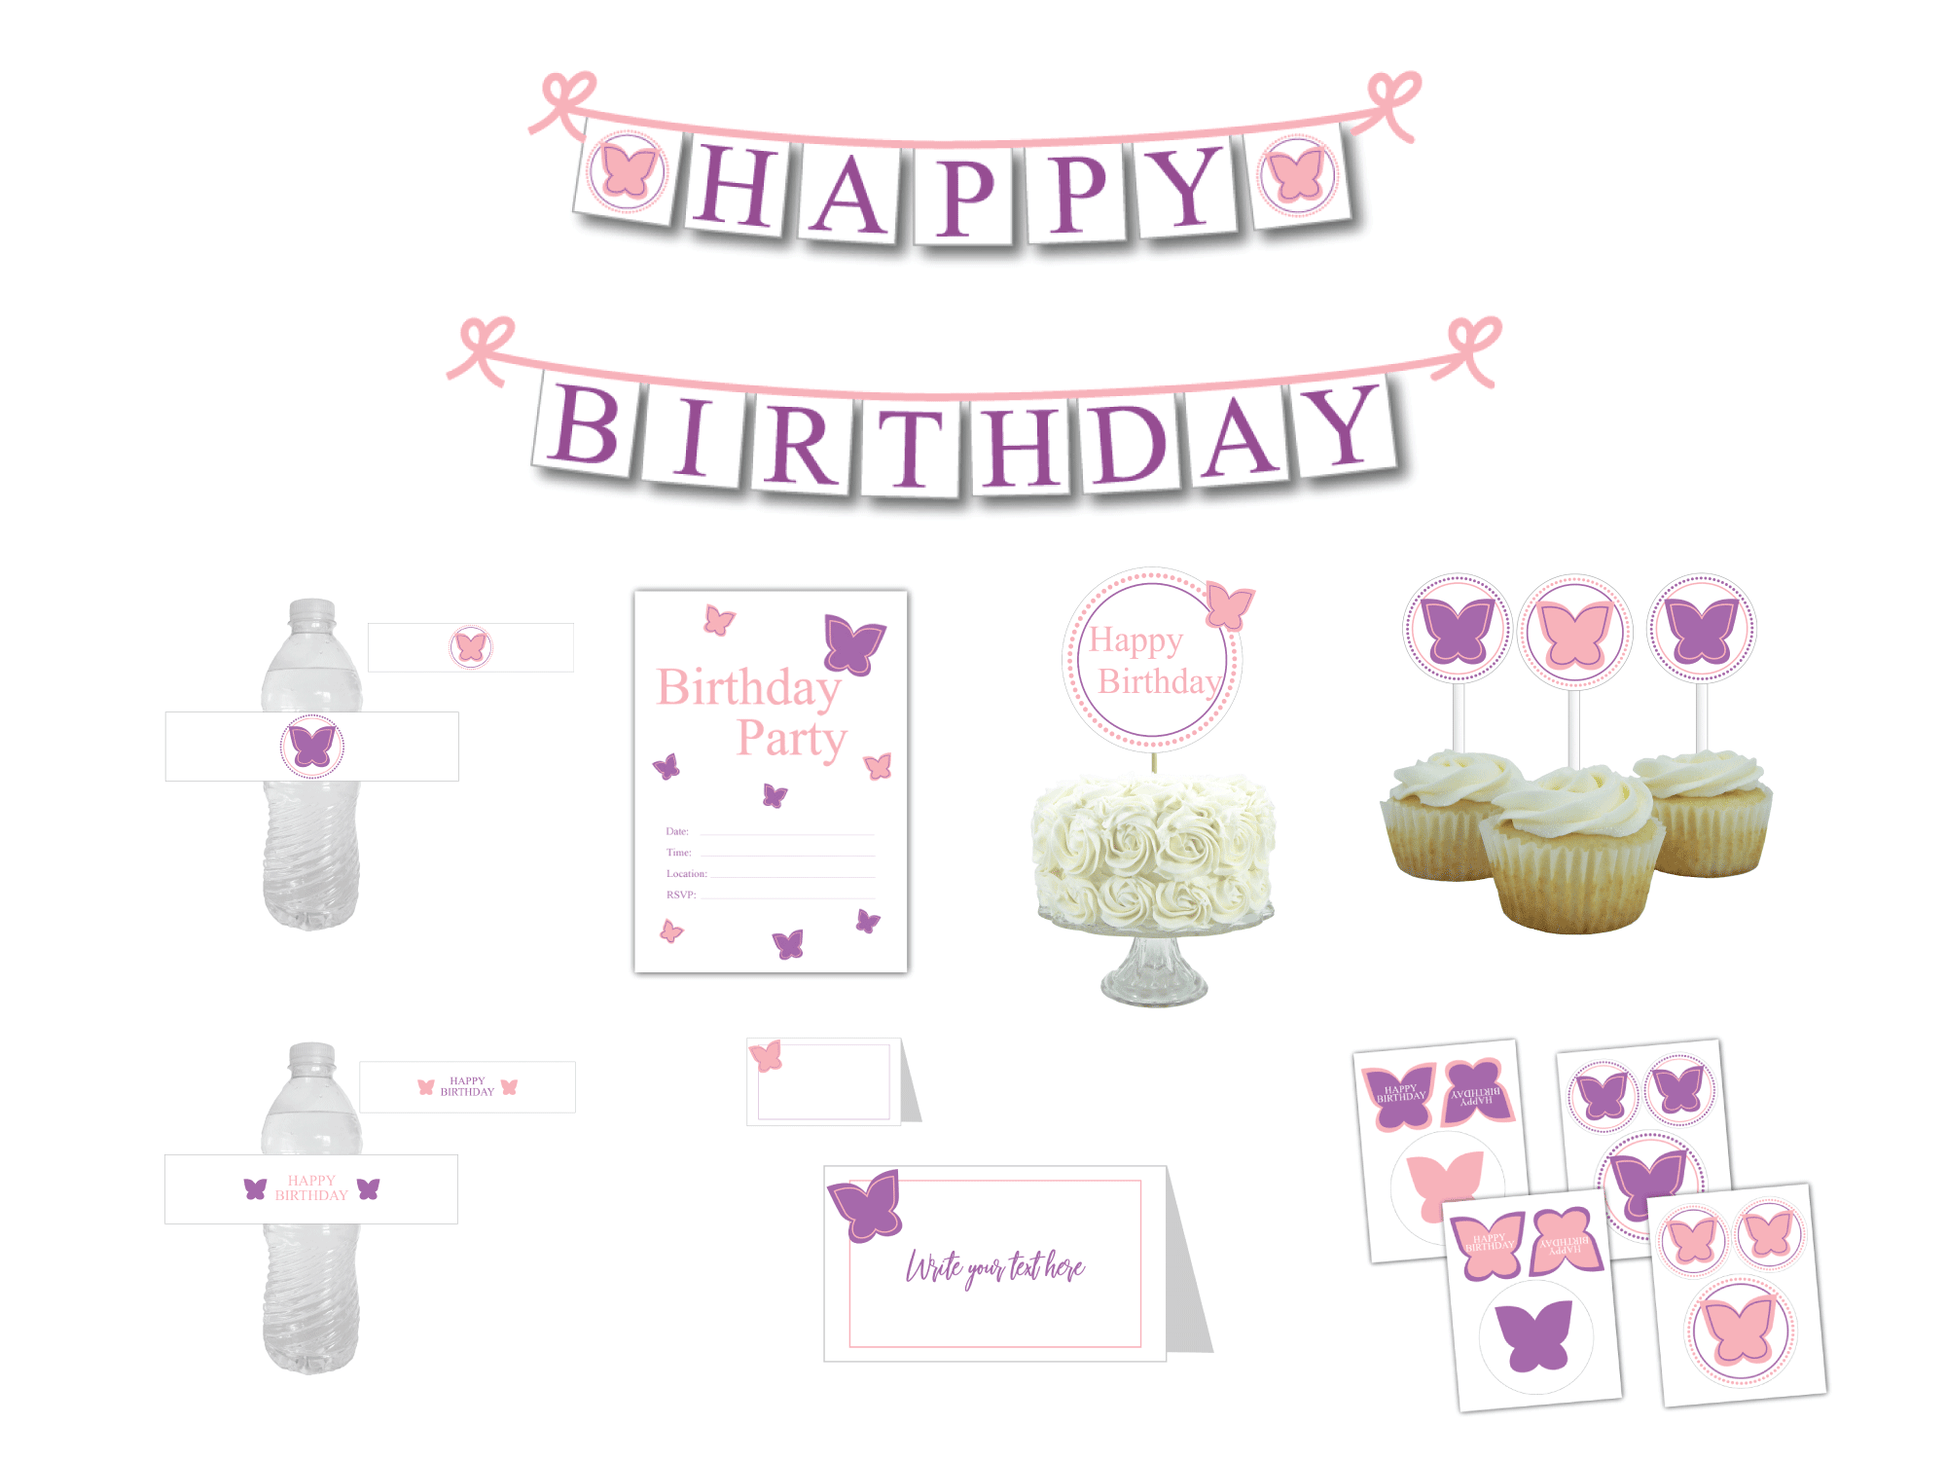 DIY girls butterfly birthday party decor kit - Celebrating Together